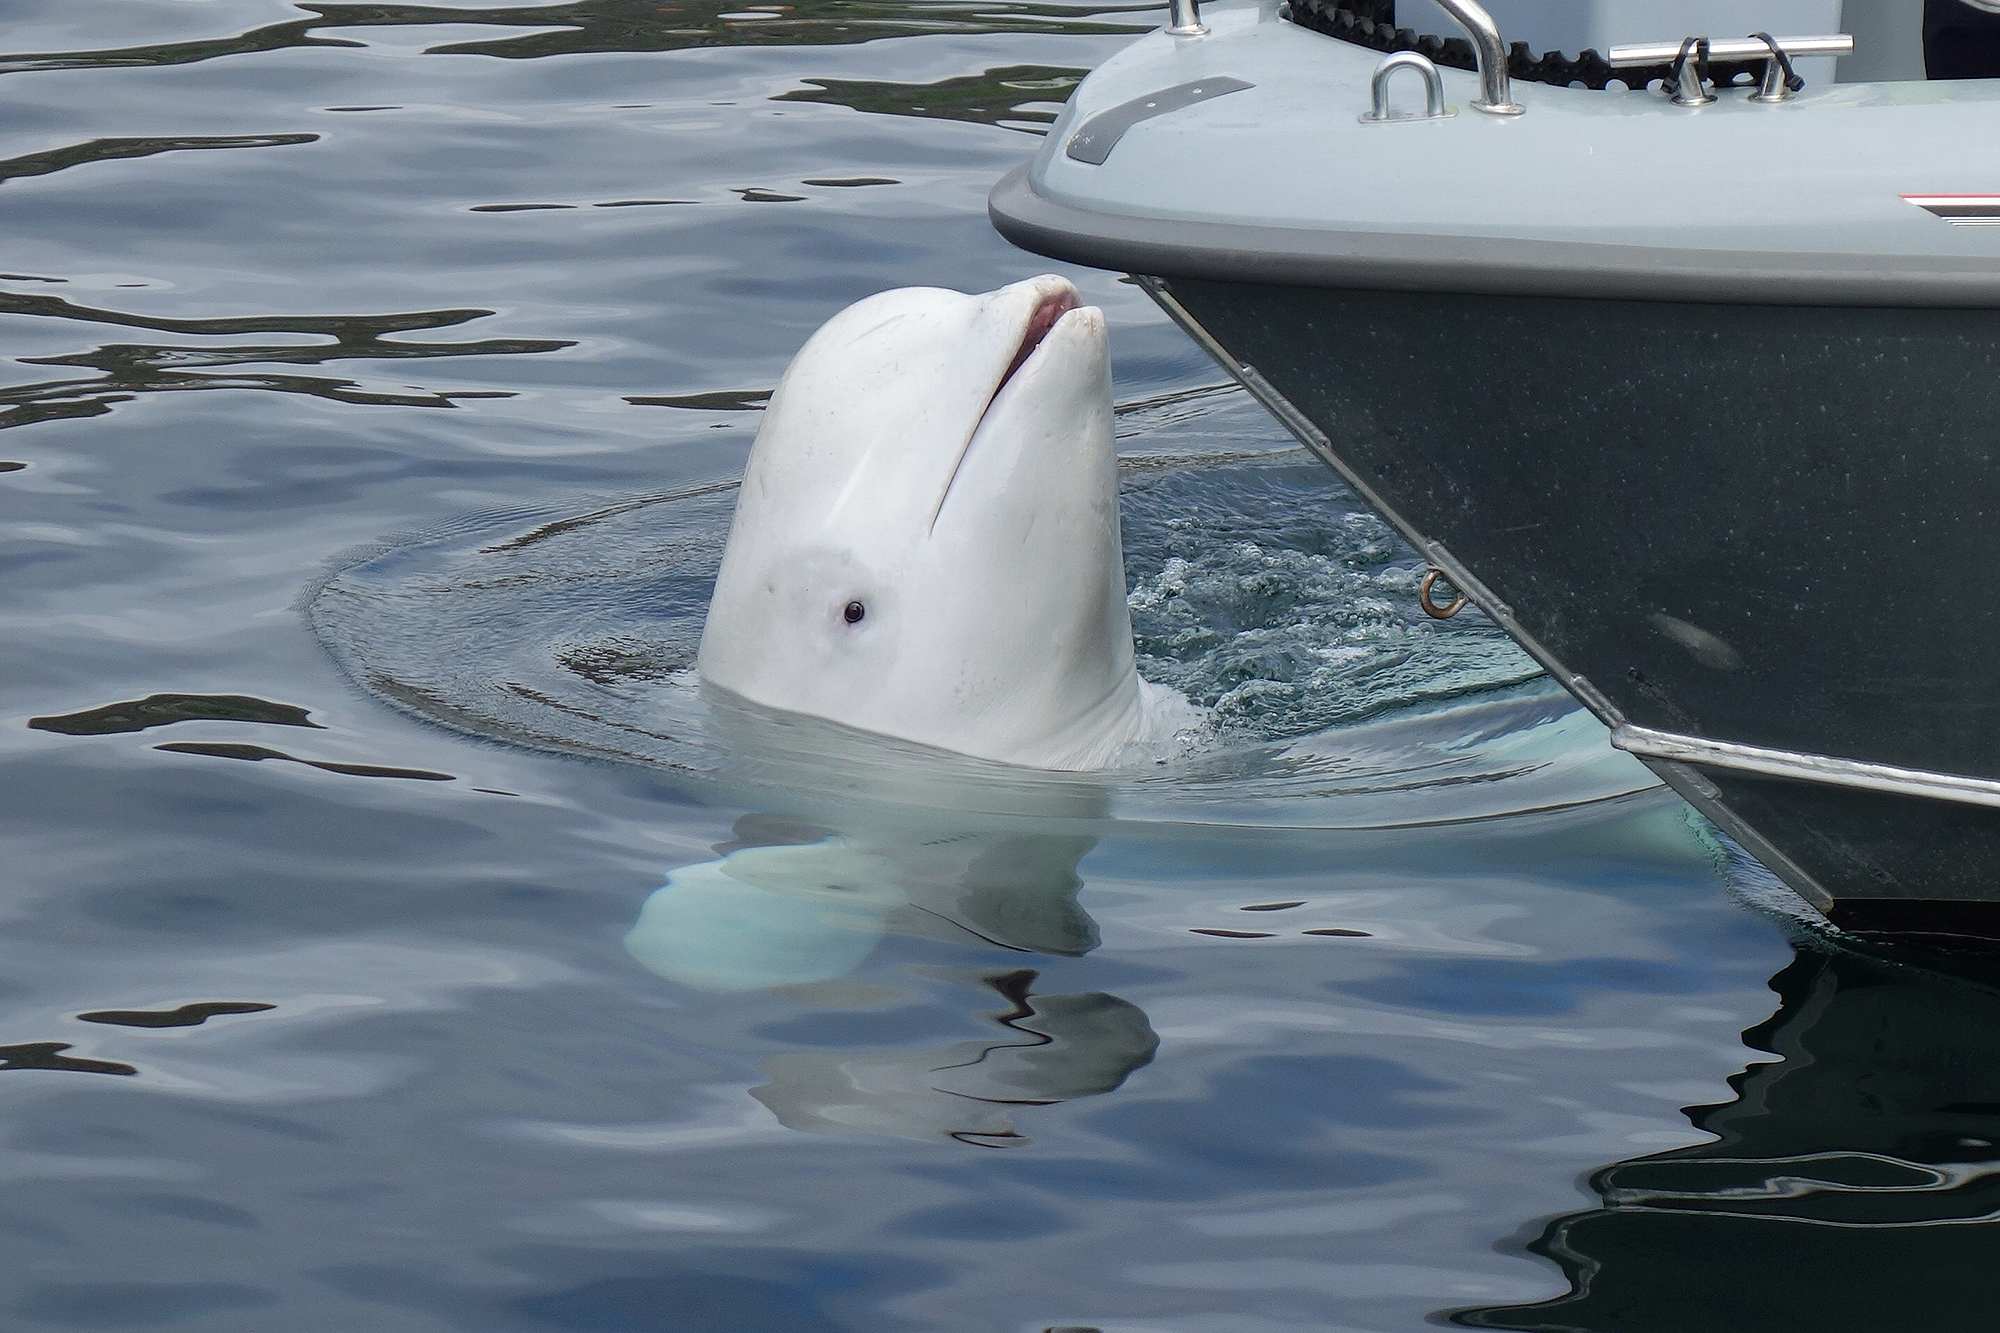 The Russian spy whale Hvaldimir near a boat in Sweden